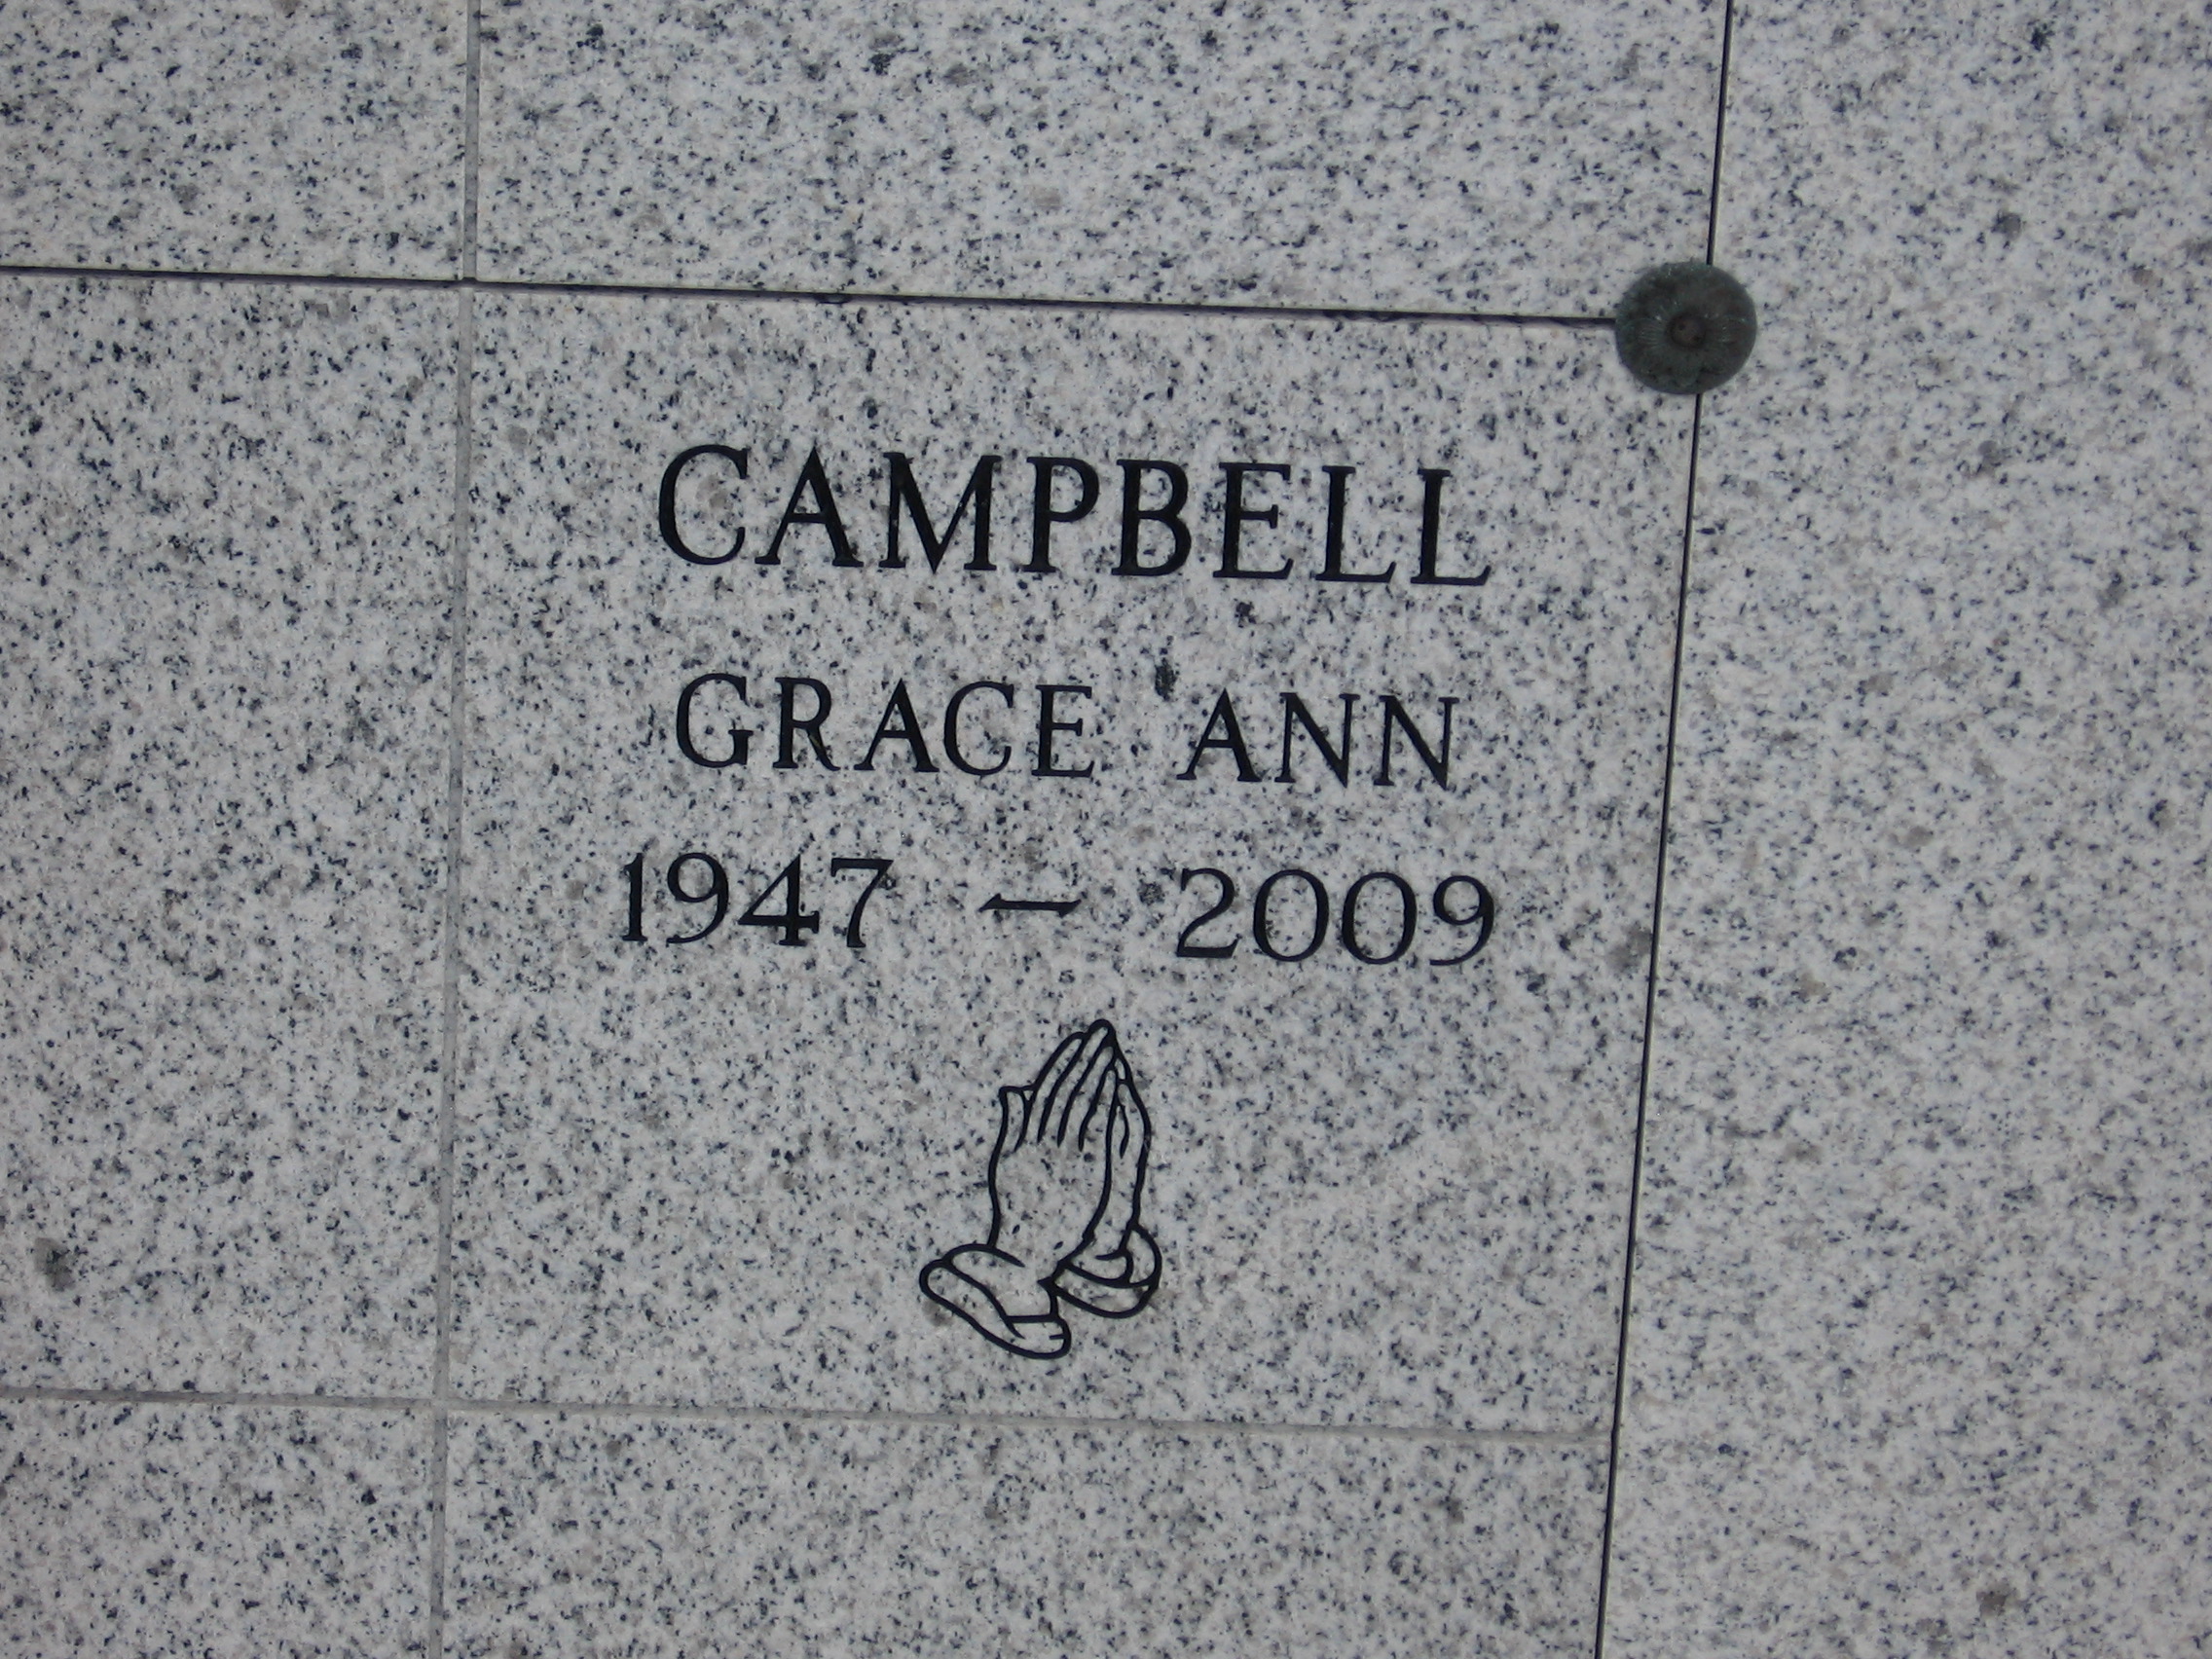 Grace Ann Campbell